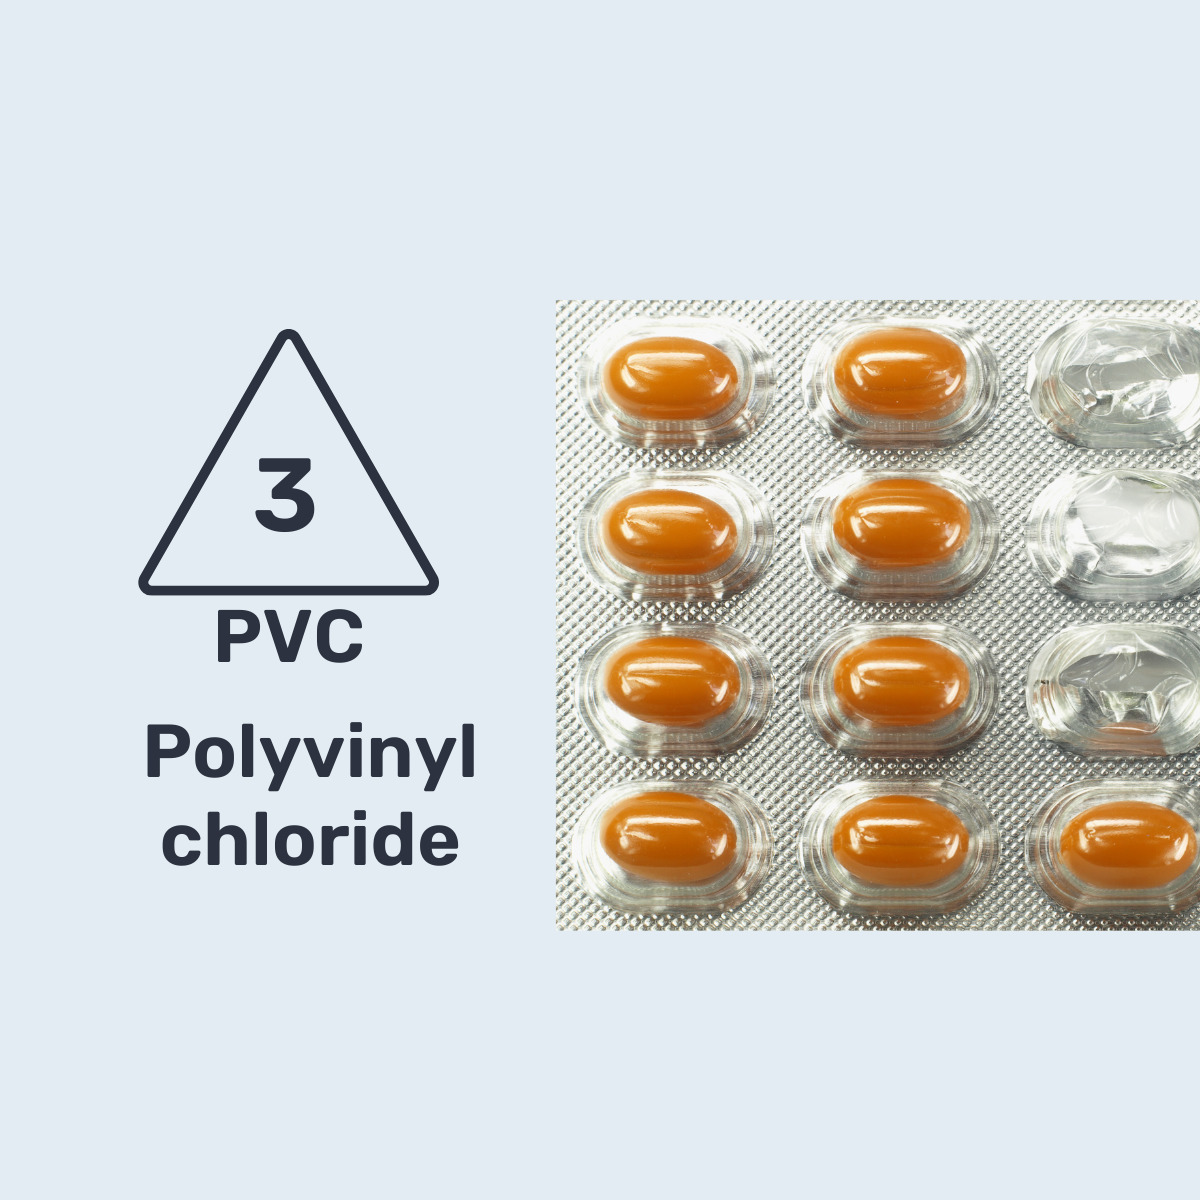 #3 PVC - Packaging Polymer Series